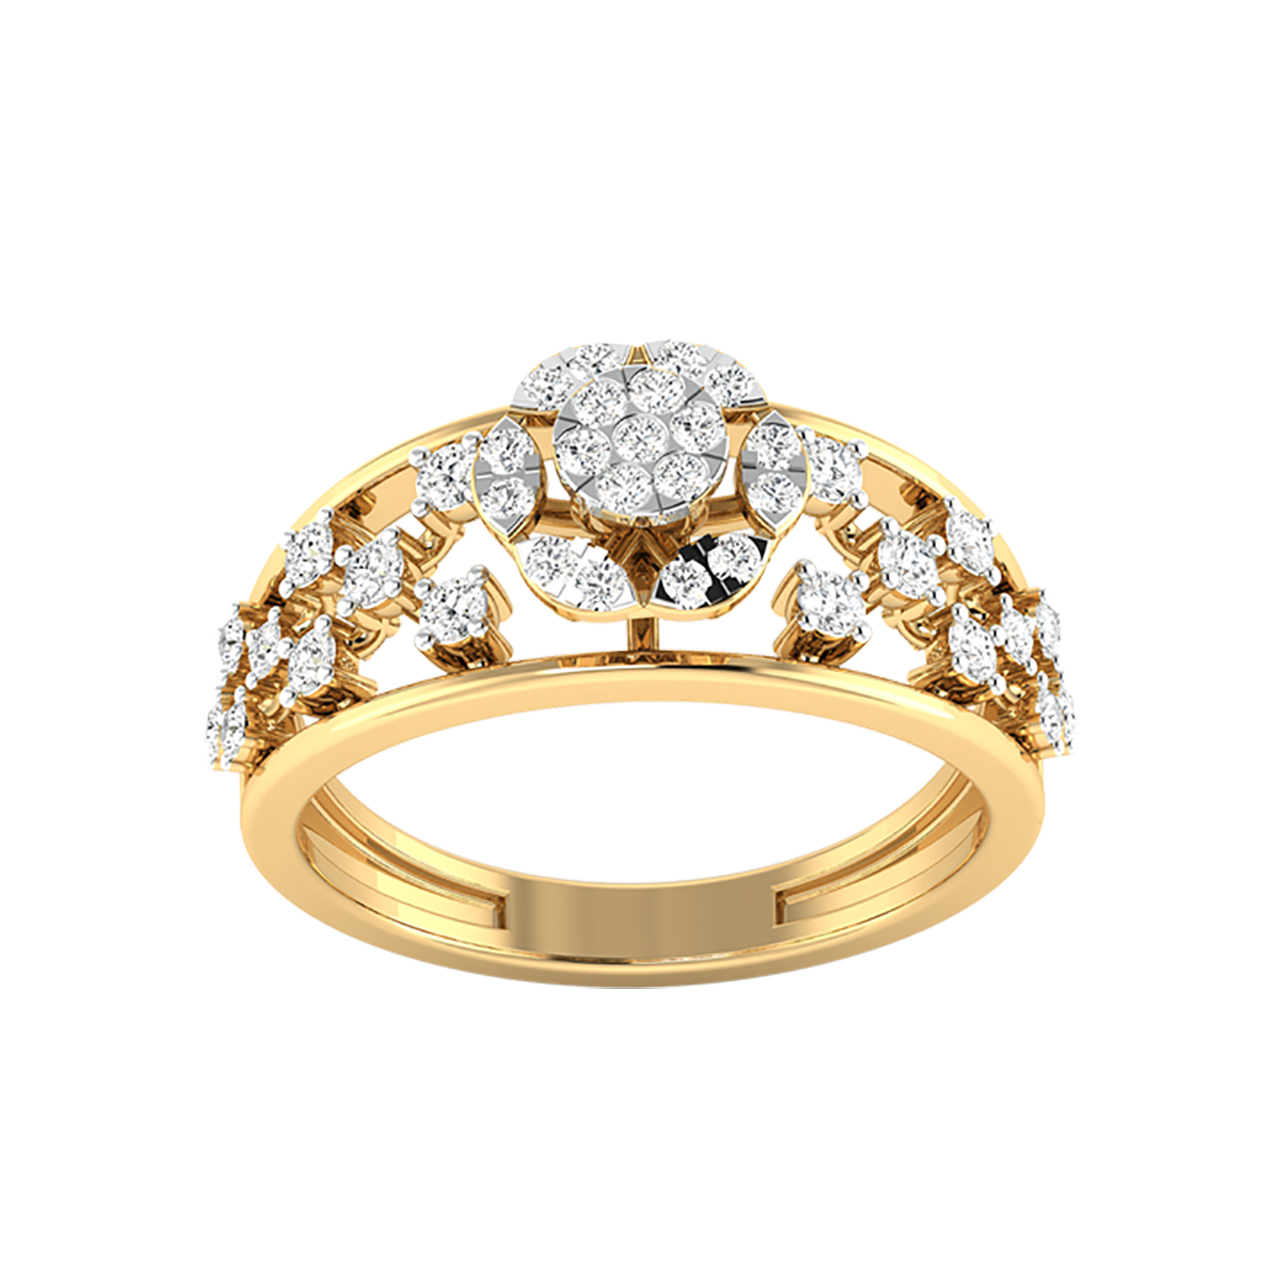 Lil Round Diamond Engagement Ring